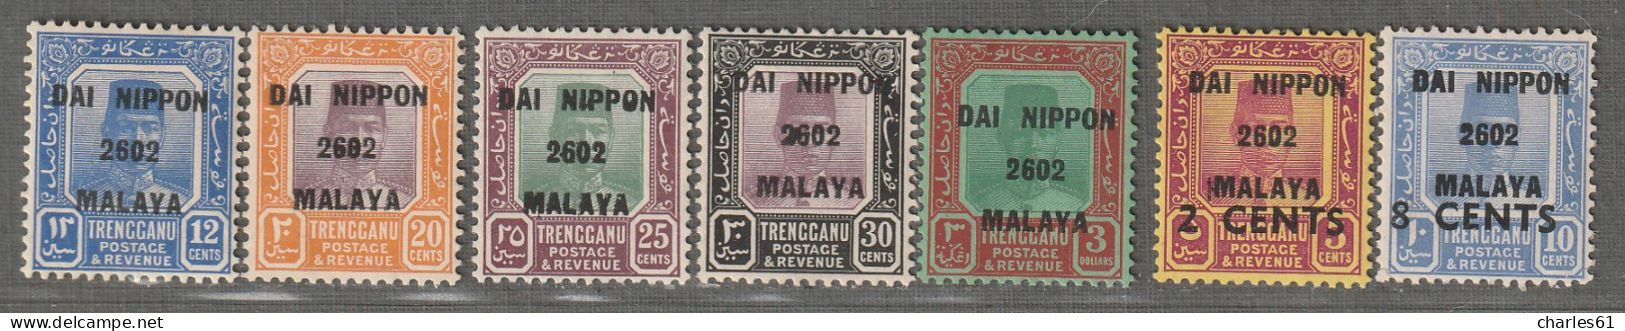 TRENGGANU - OCCUPATION JAPONAISE - N°29/35 * (1942) "Dai Nippon 2602 Malaya" - Occupazione Giapponese